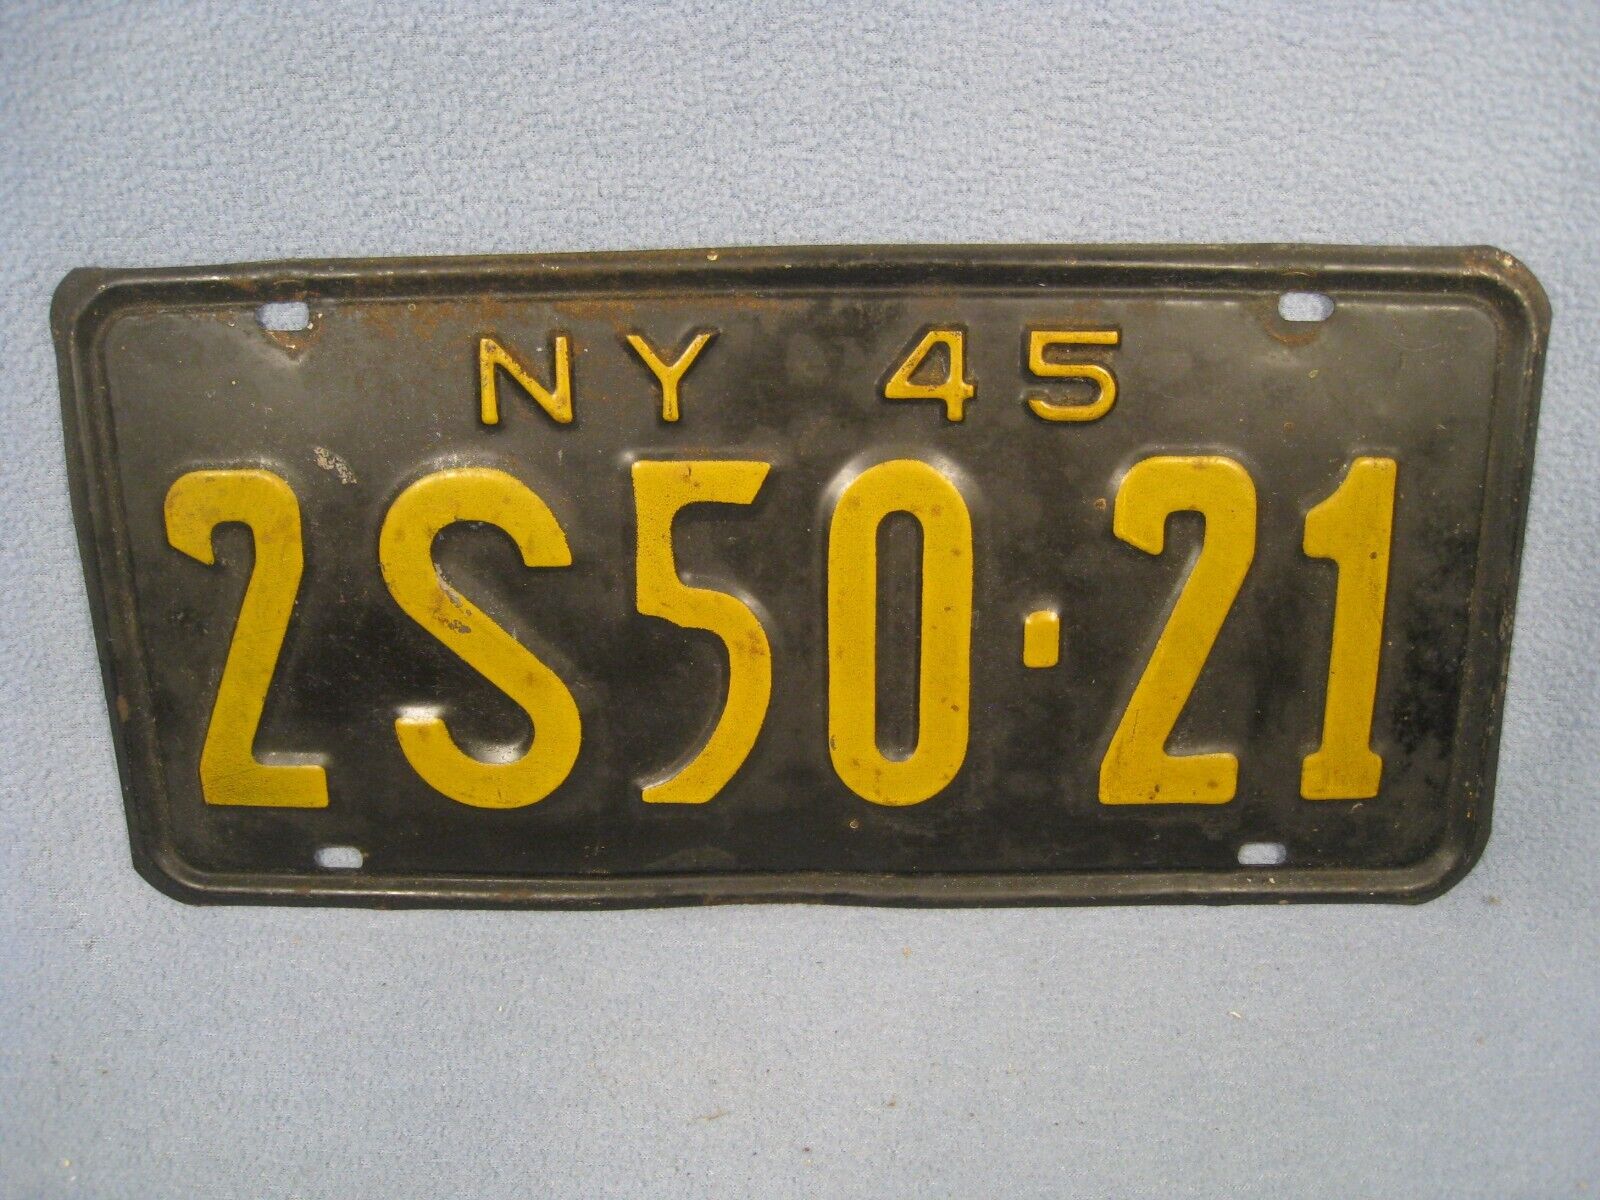 Vintage 1945 New York License Plate - Original Paint